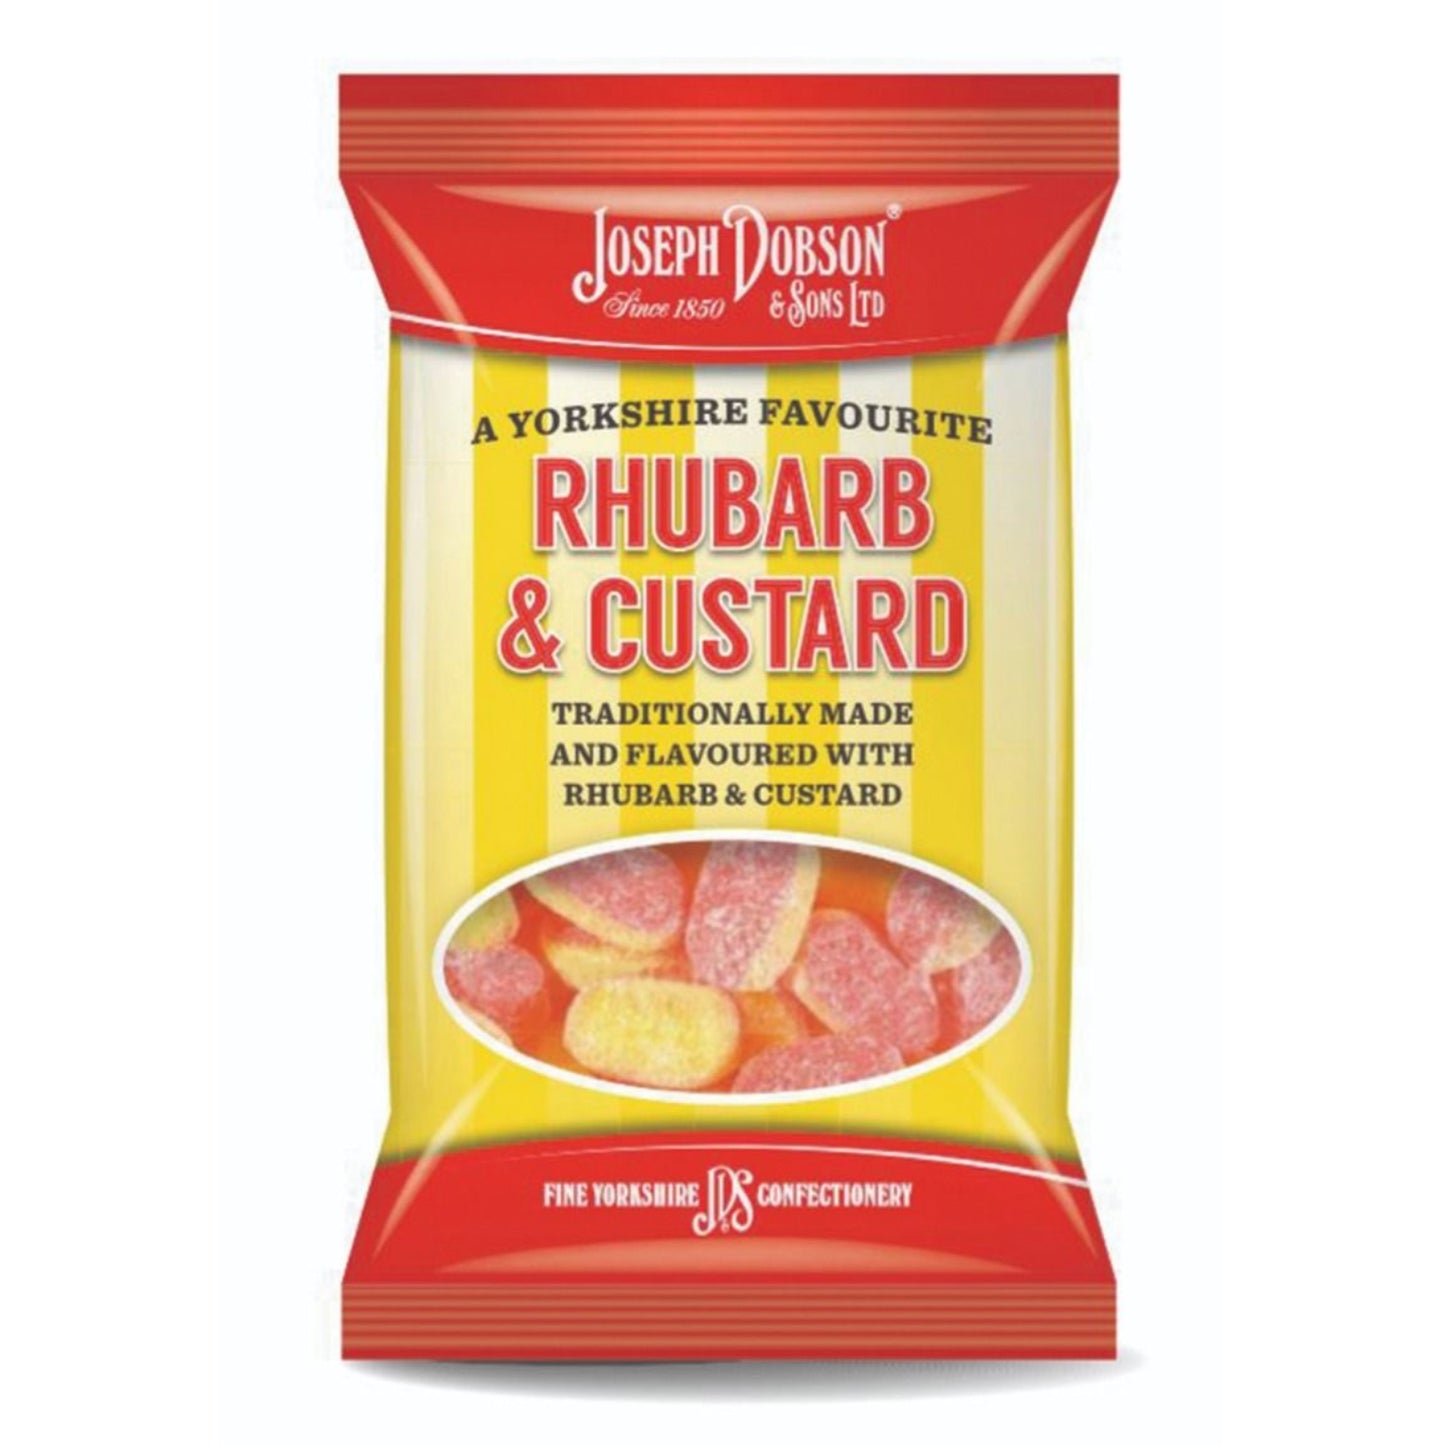 Rhubarb & Custard 200g Bag - The Great Yorkshire Shop